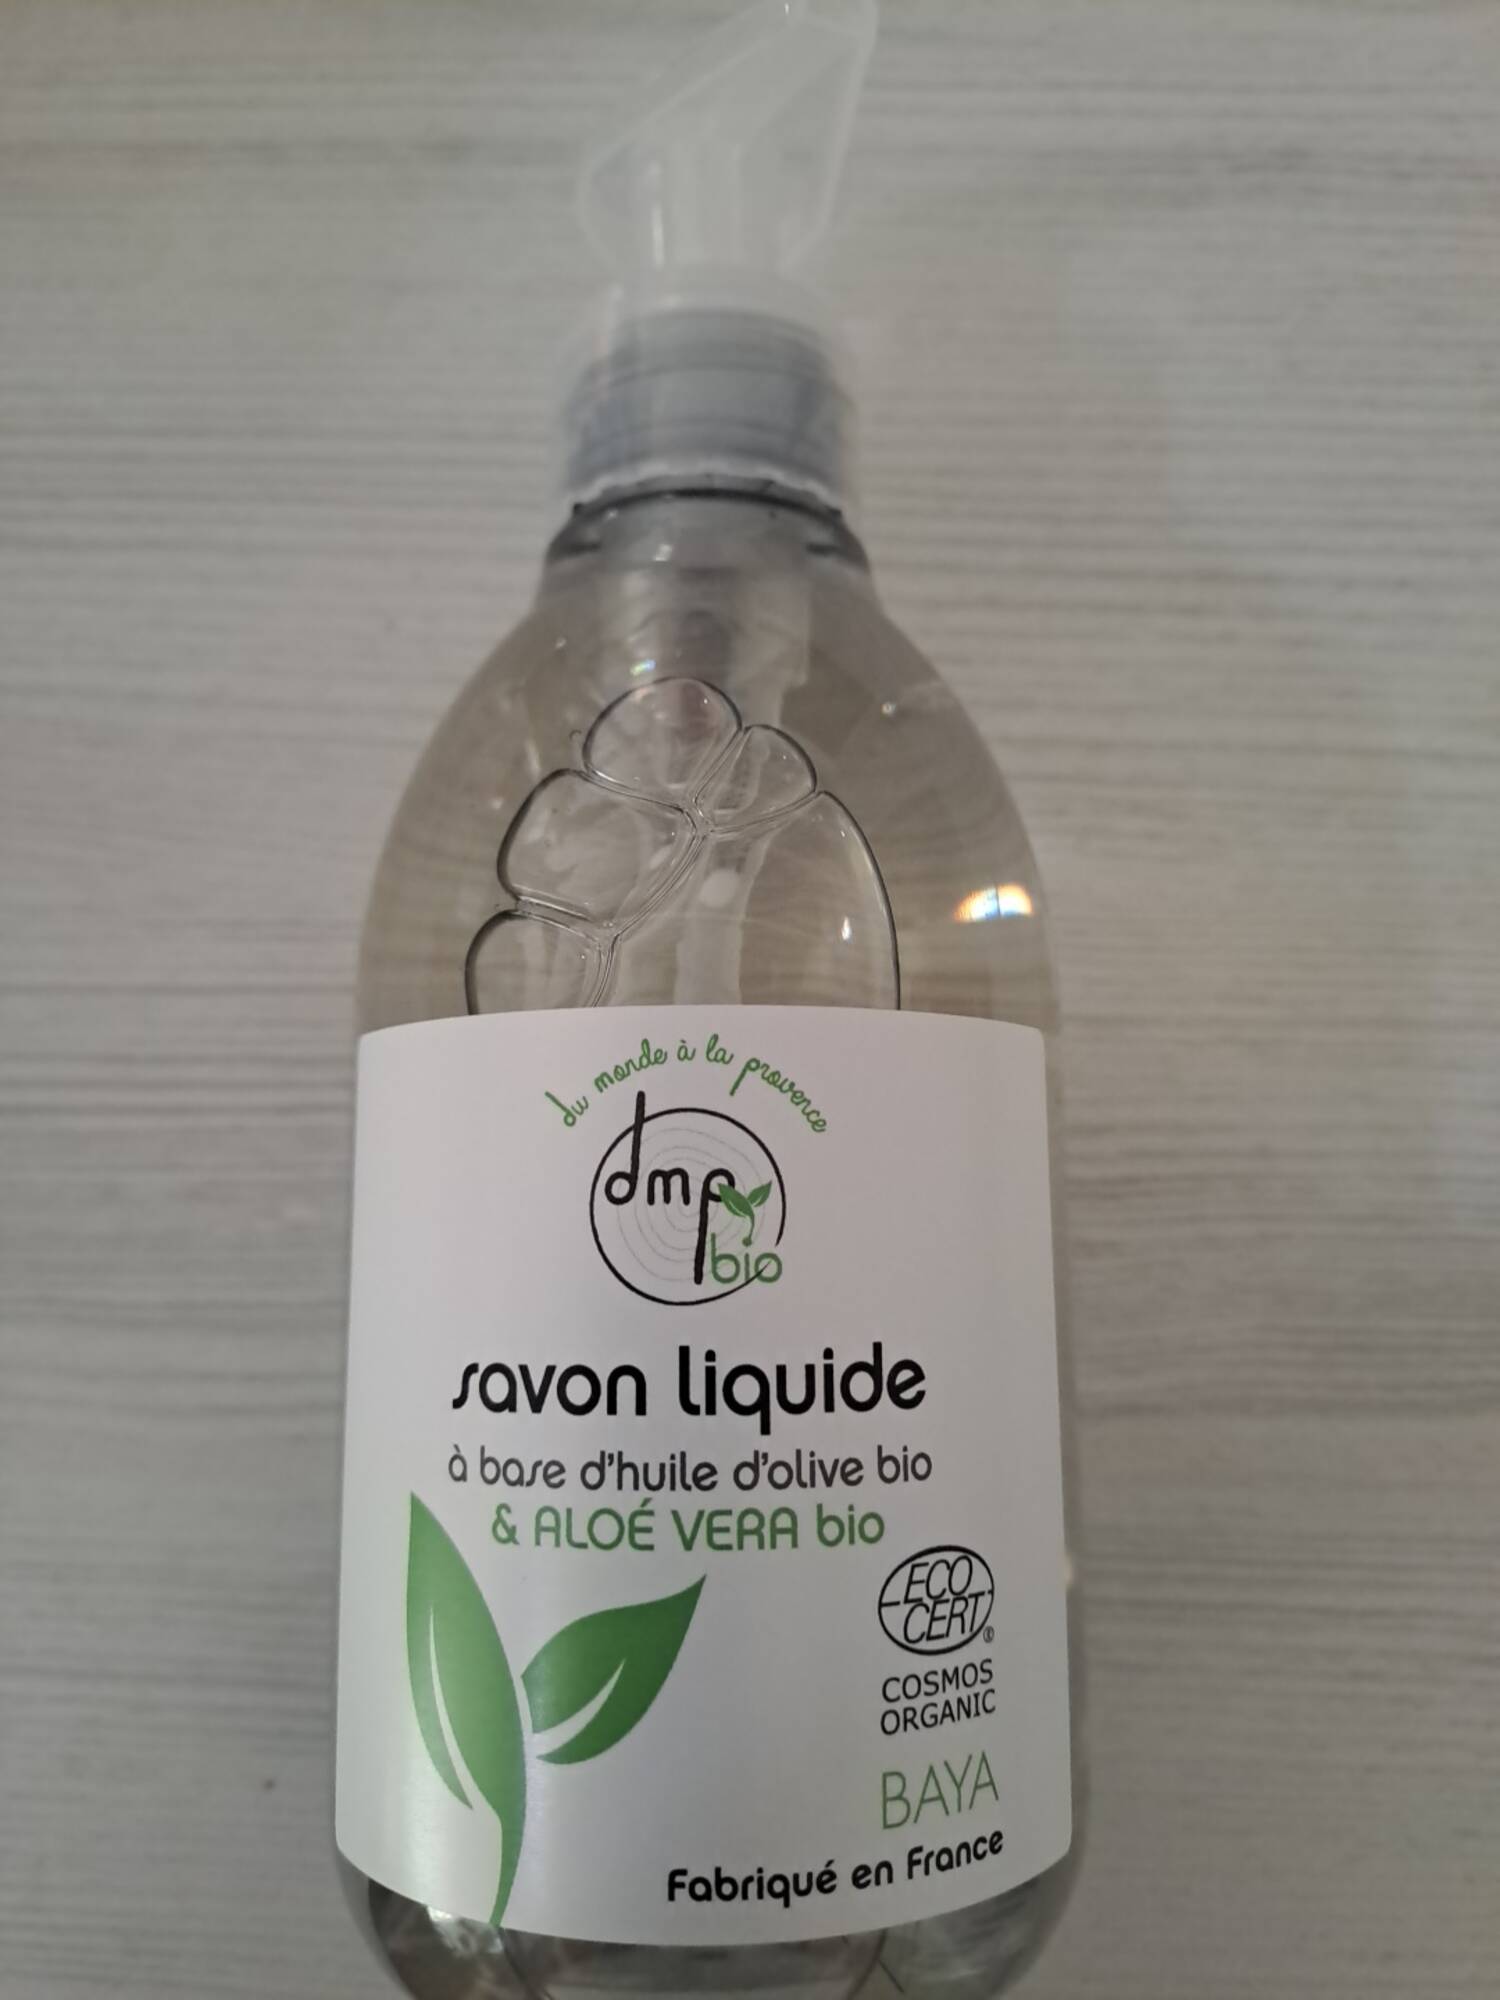 DU MONDE DE LA PROVENCE - Savon liquide huile d'olive bio & aloé vera bio